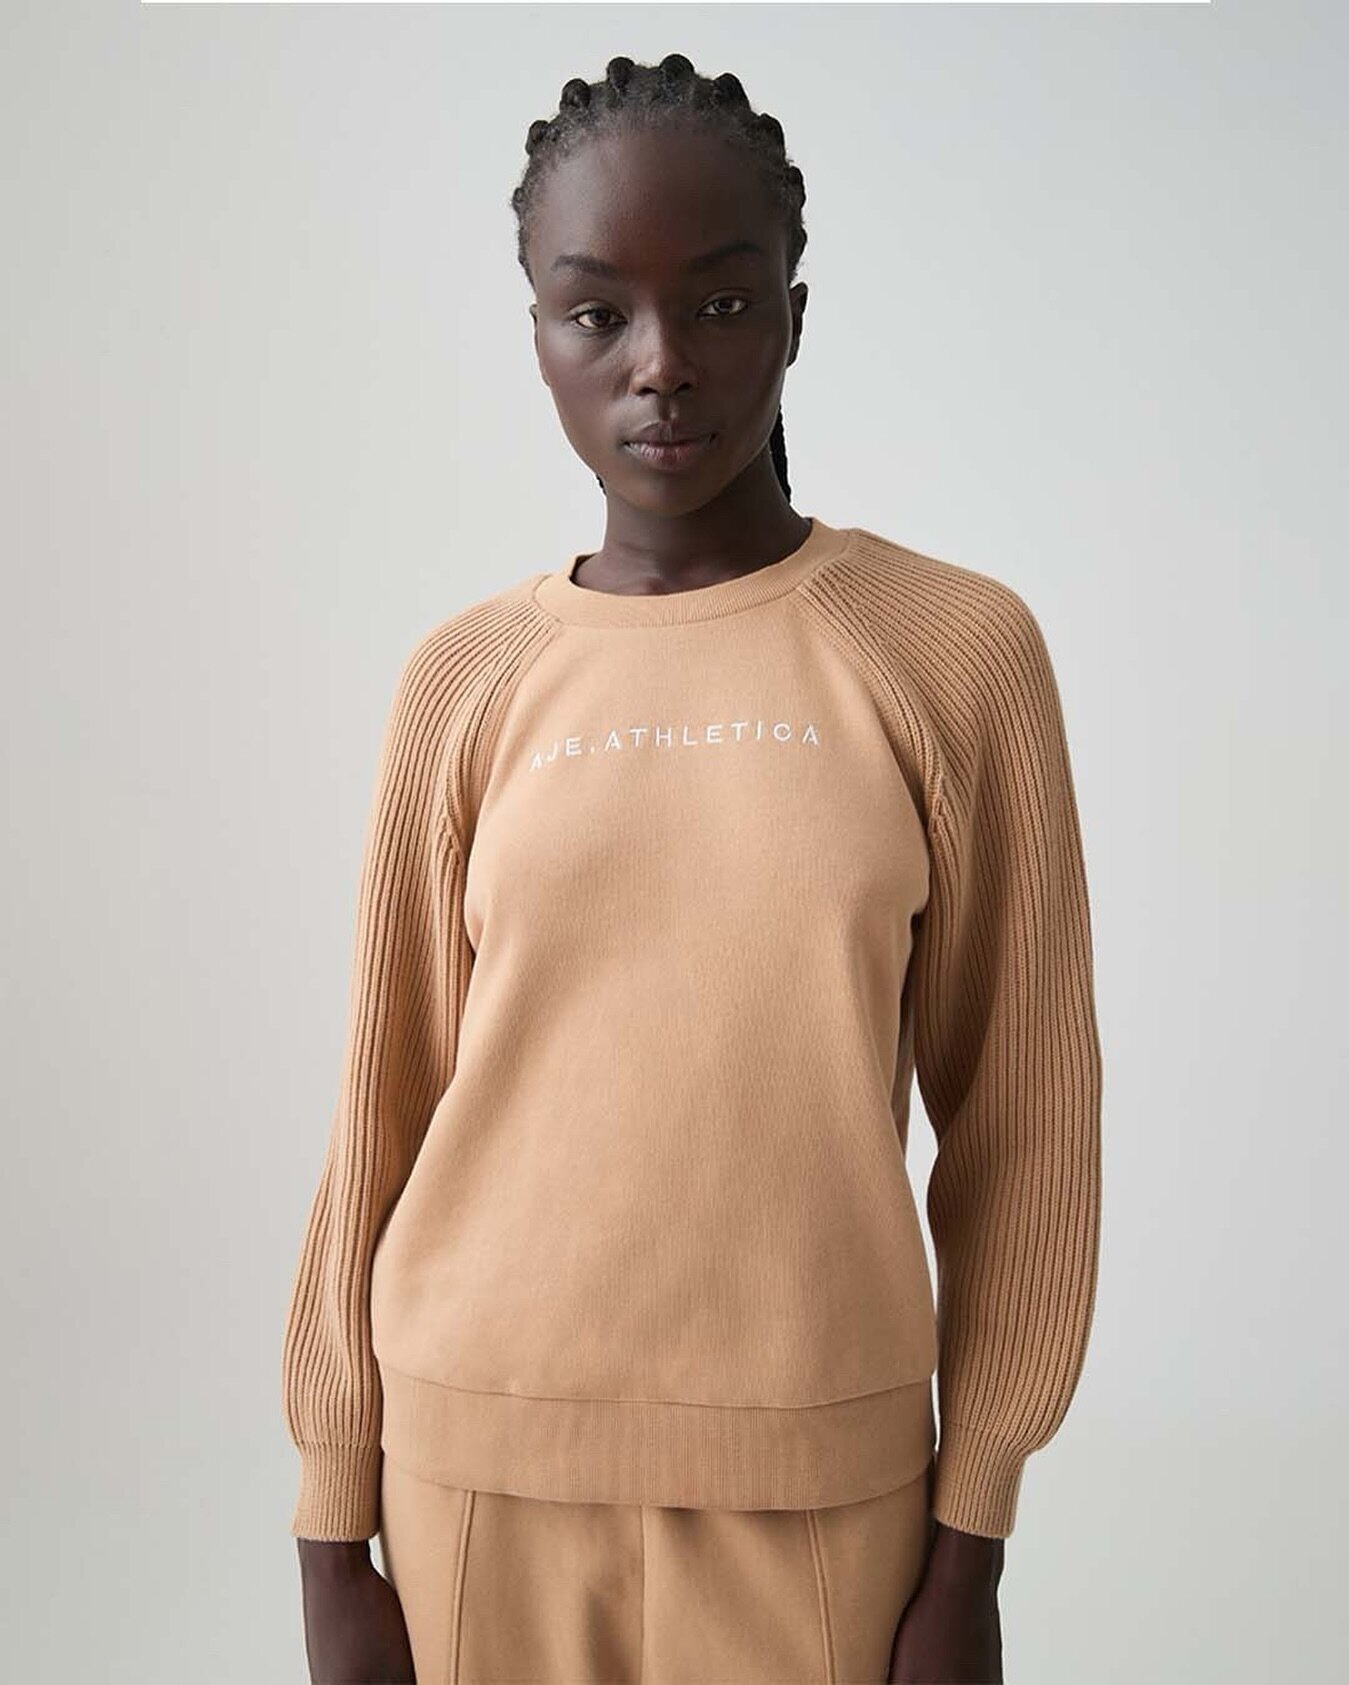 @ajeathletica Raglan Contrast Knit Crew Sweater sourced by us!💛💛💛

#highquality #production #quantity #luxury #fashion #fashion #activewear #fashion #source #fashionagent